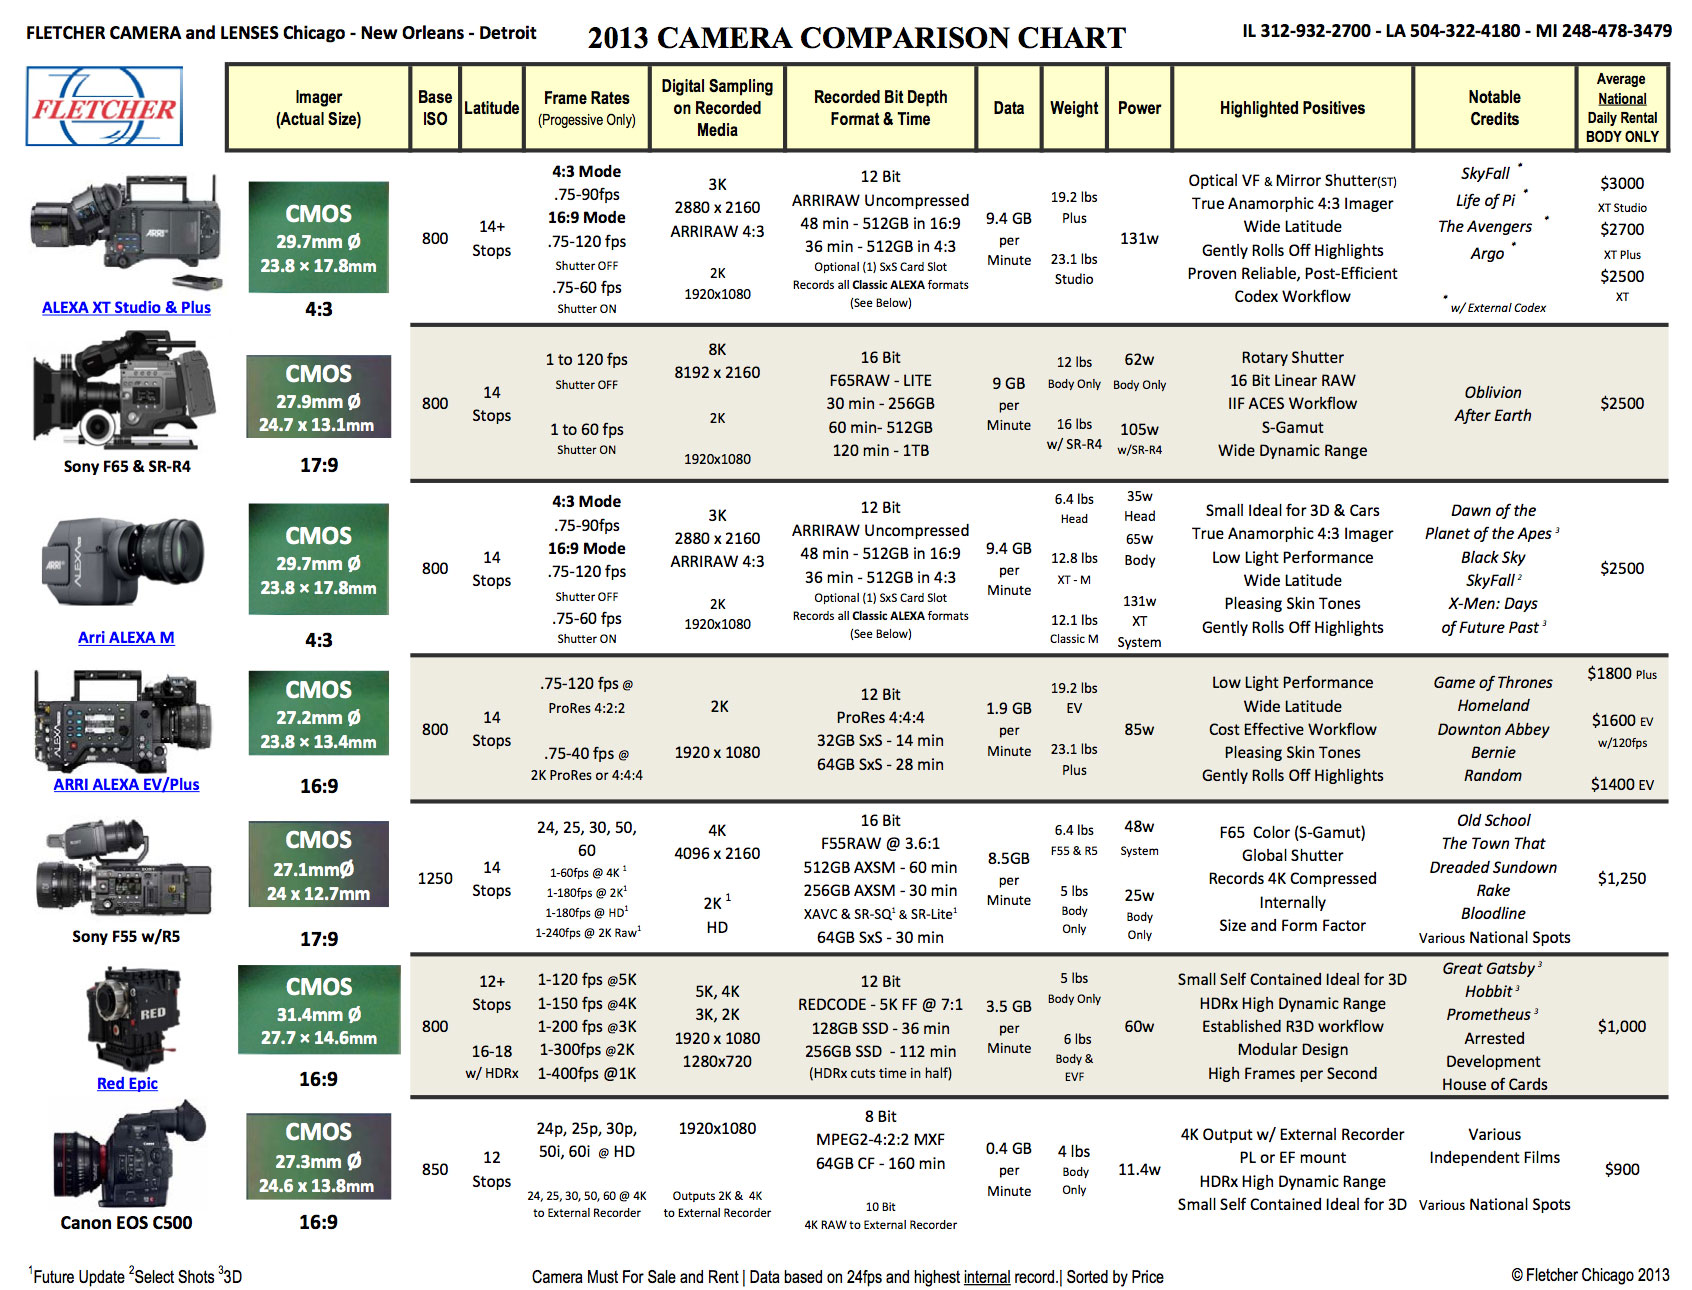 Fletcher Camera Comparison Chart 2013 | cinema5D